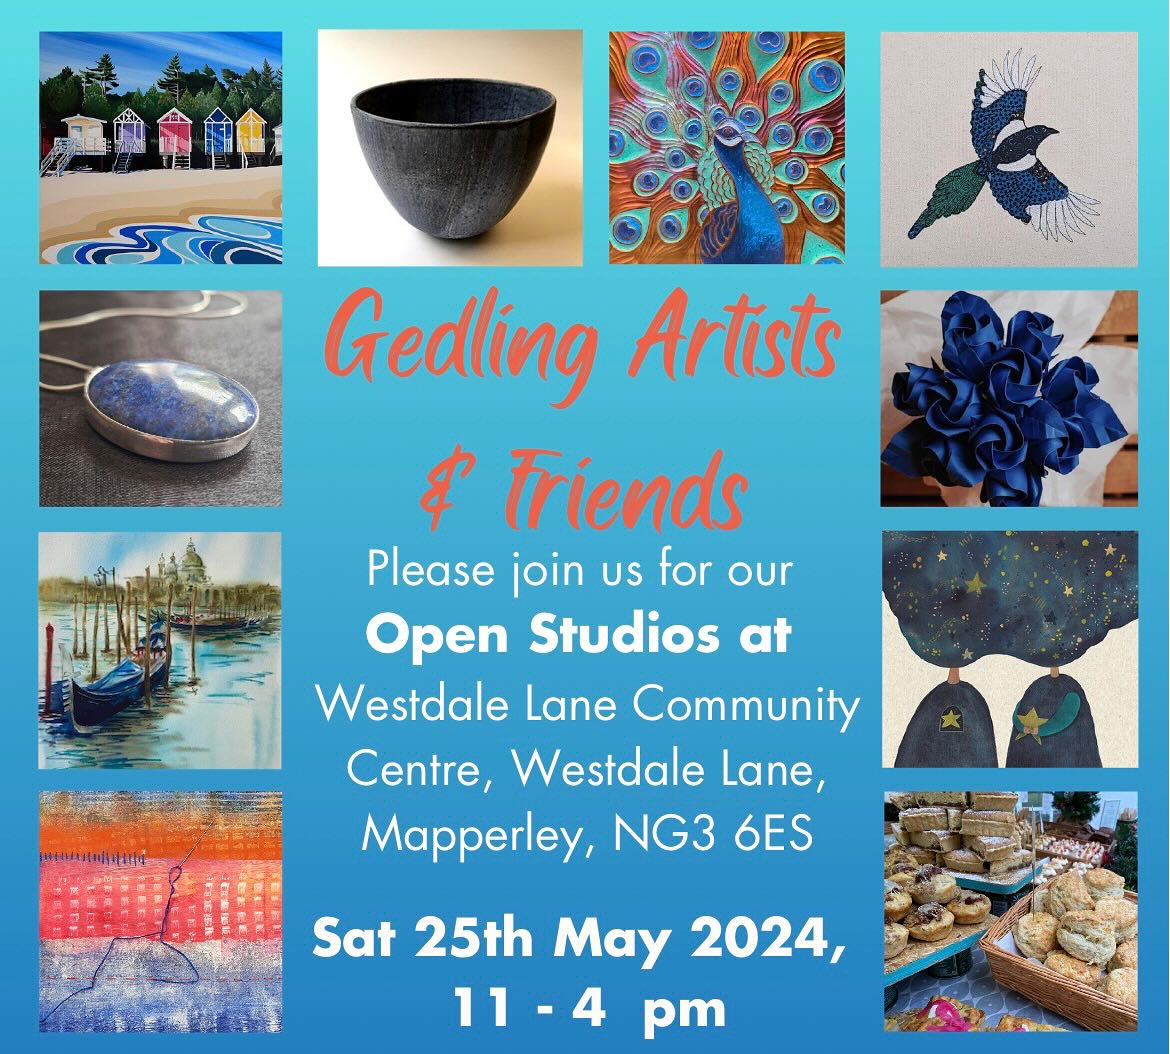 Venue 26 of #osnotts2024 - the @GedlingArtists - Sat 25 May at Westdale Lane Community Centre, Mapperley.
osnotts.co.uk/wp-content/upl…

#OpenStudiosNotts2024 #openstudiosnotts #brochure #openstudio #openstudios #nottsopenstudios #nottinghamshire #visitnotts #art #artist #craft #maker